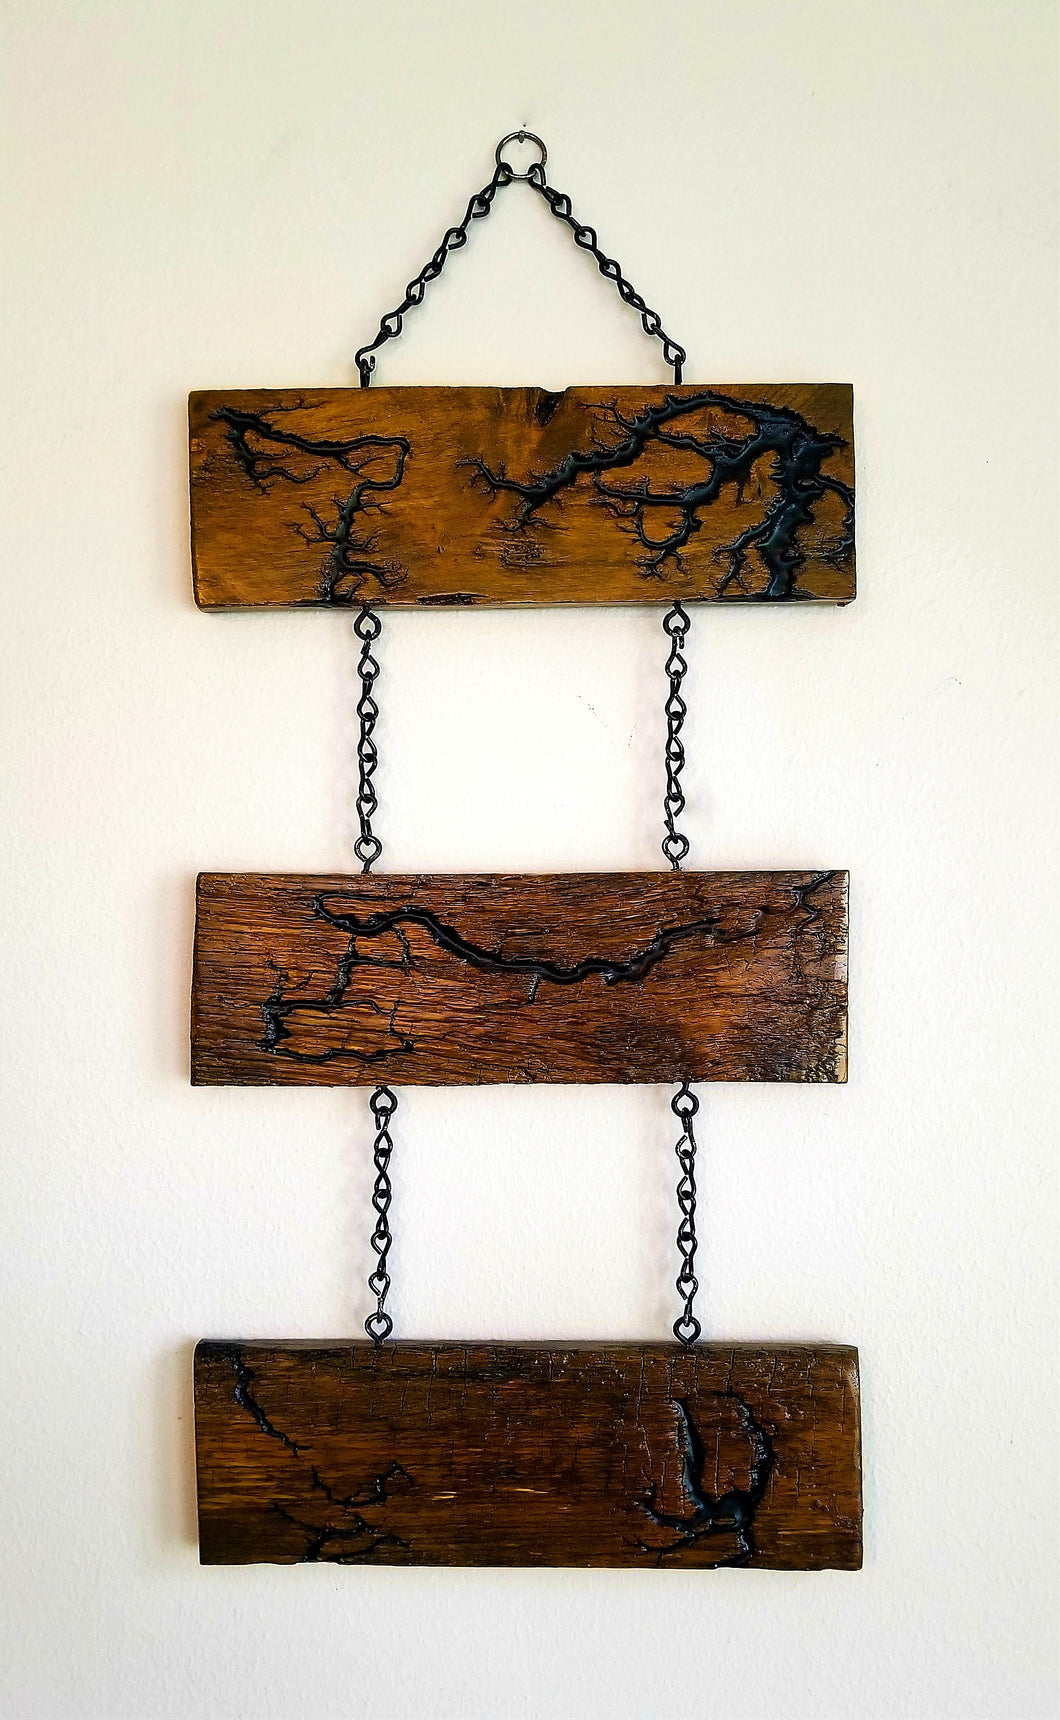 Lichtenberg burned green wood chained triptych